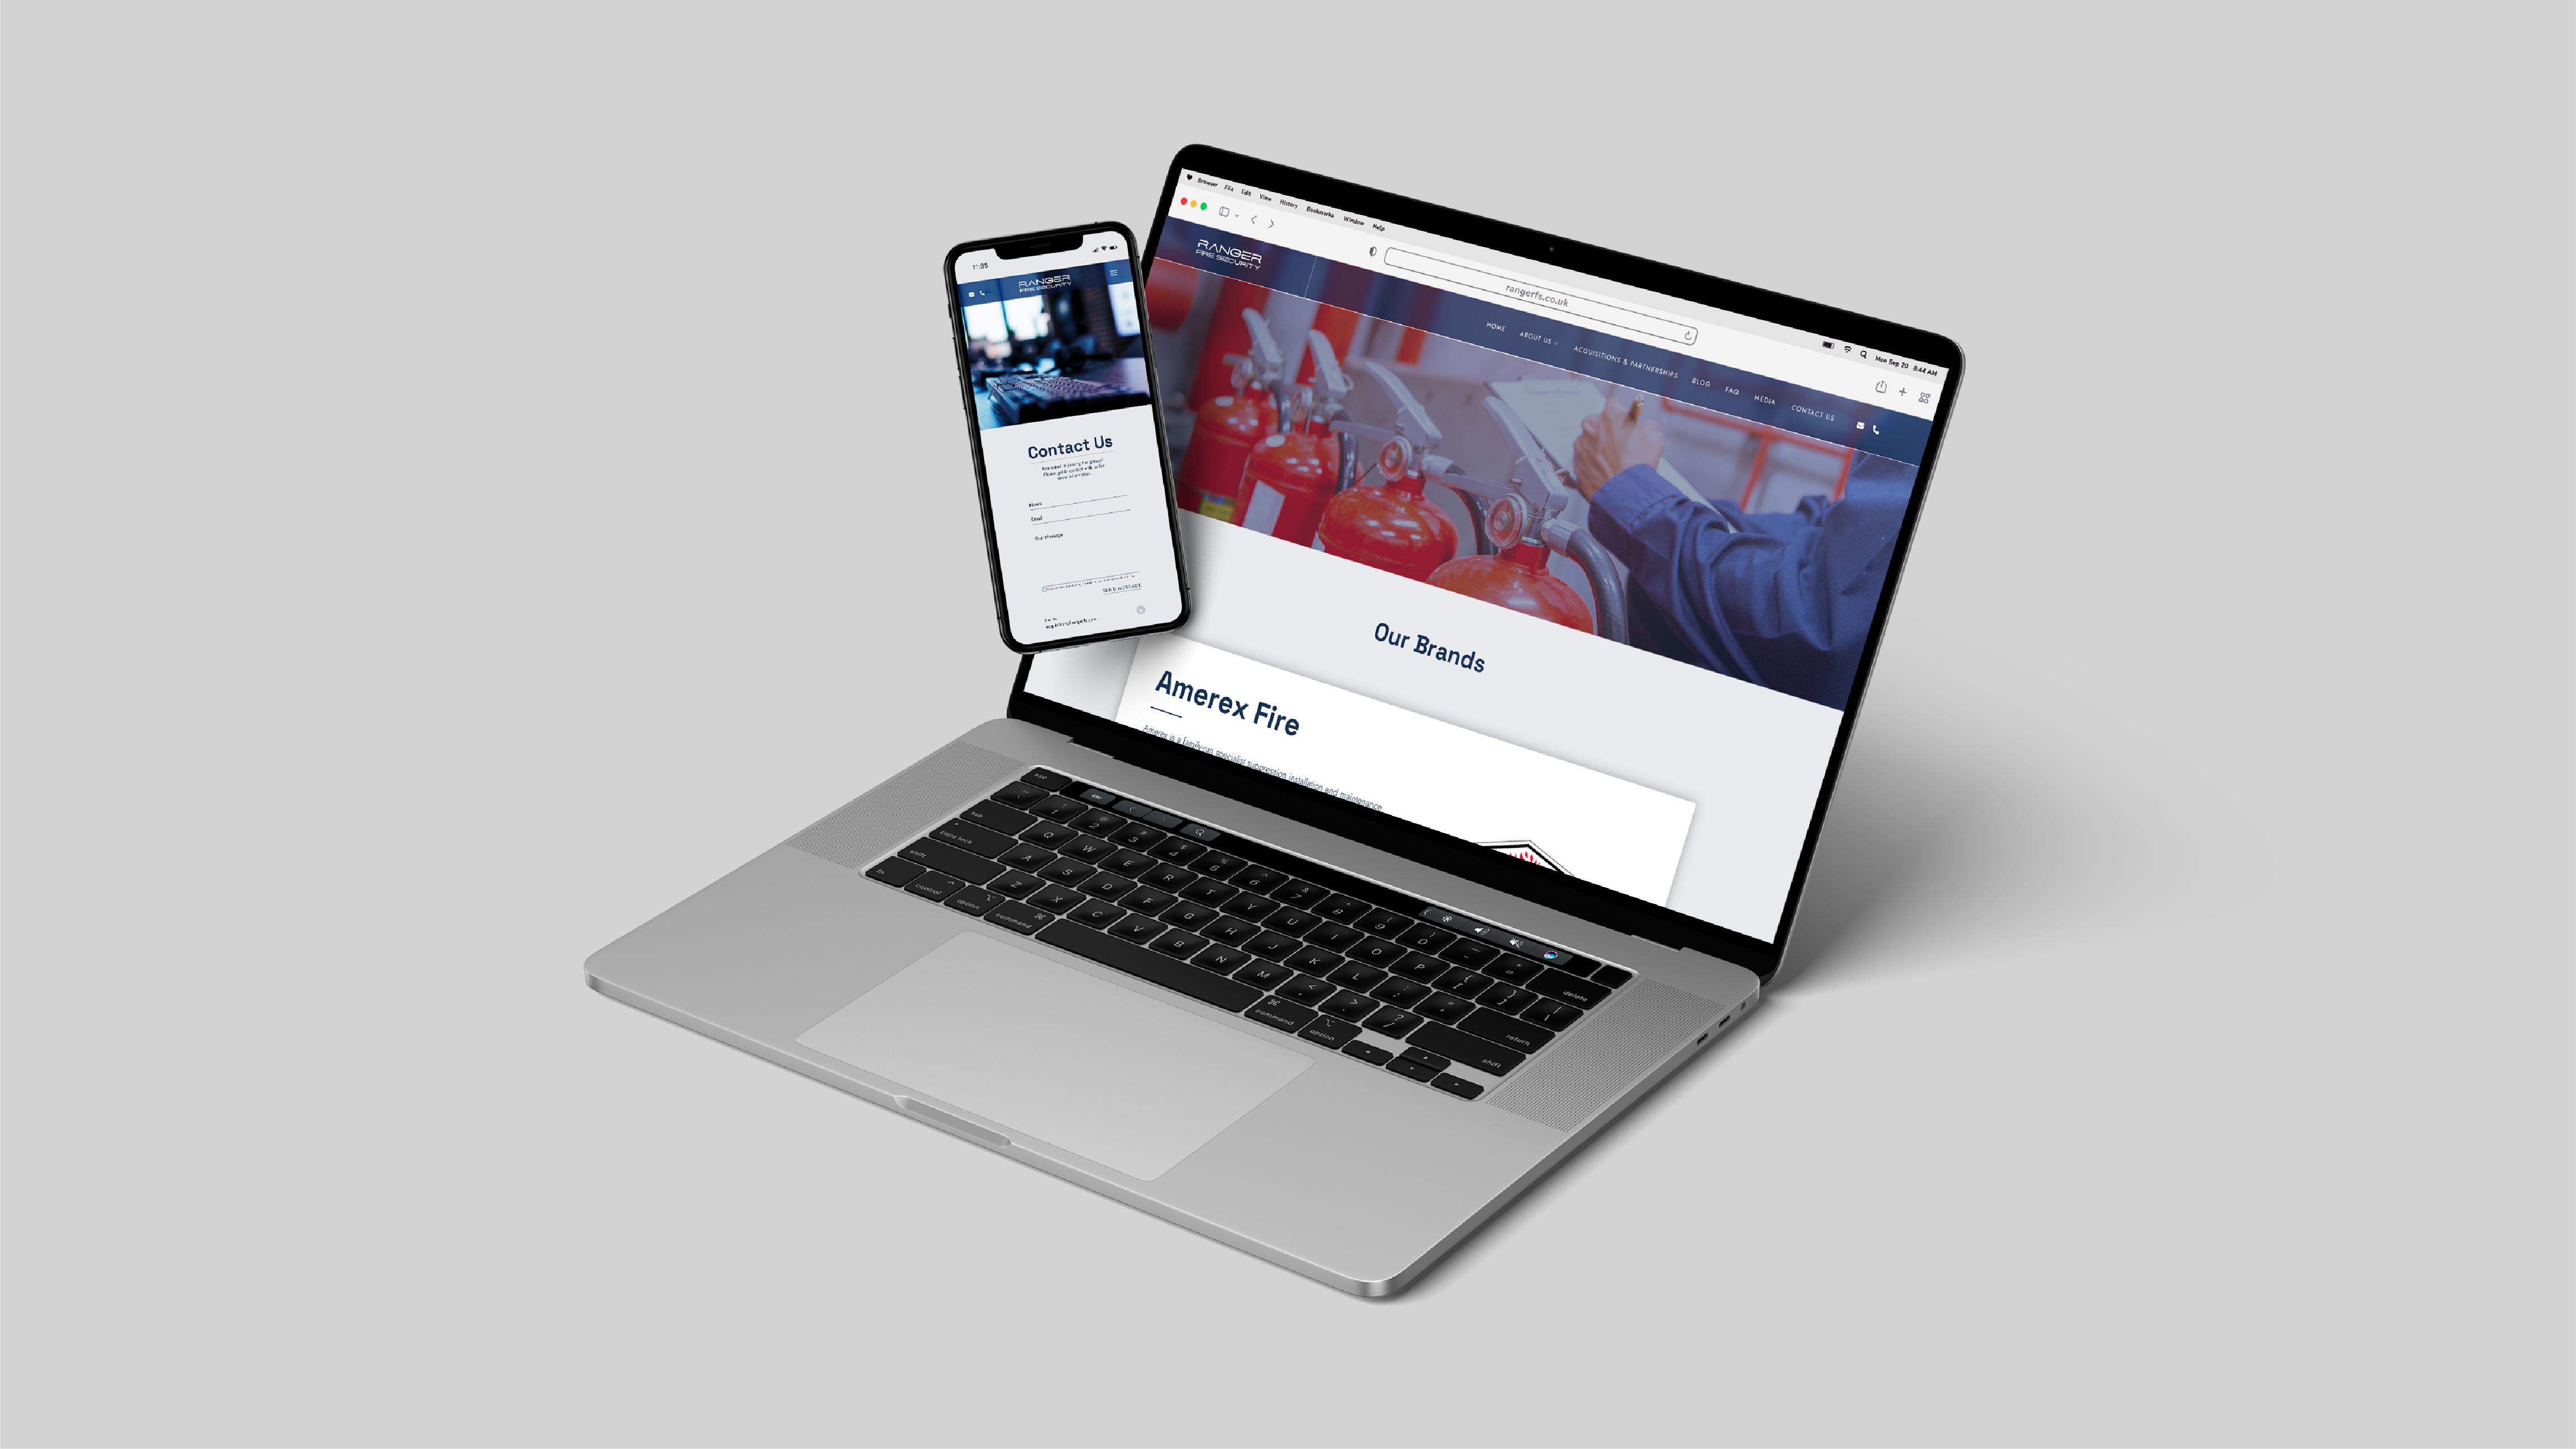 Ranger Website Designs